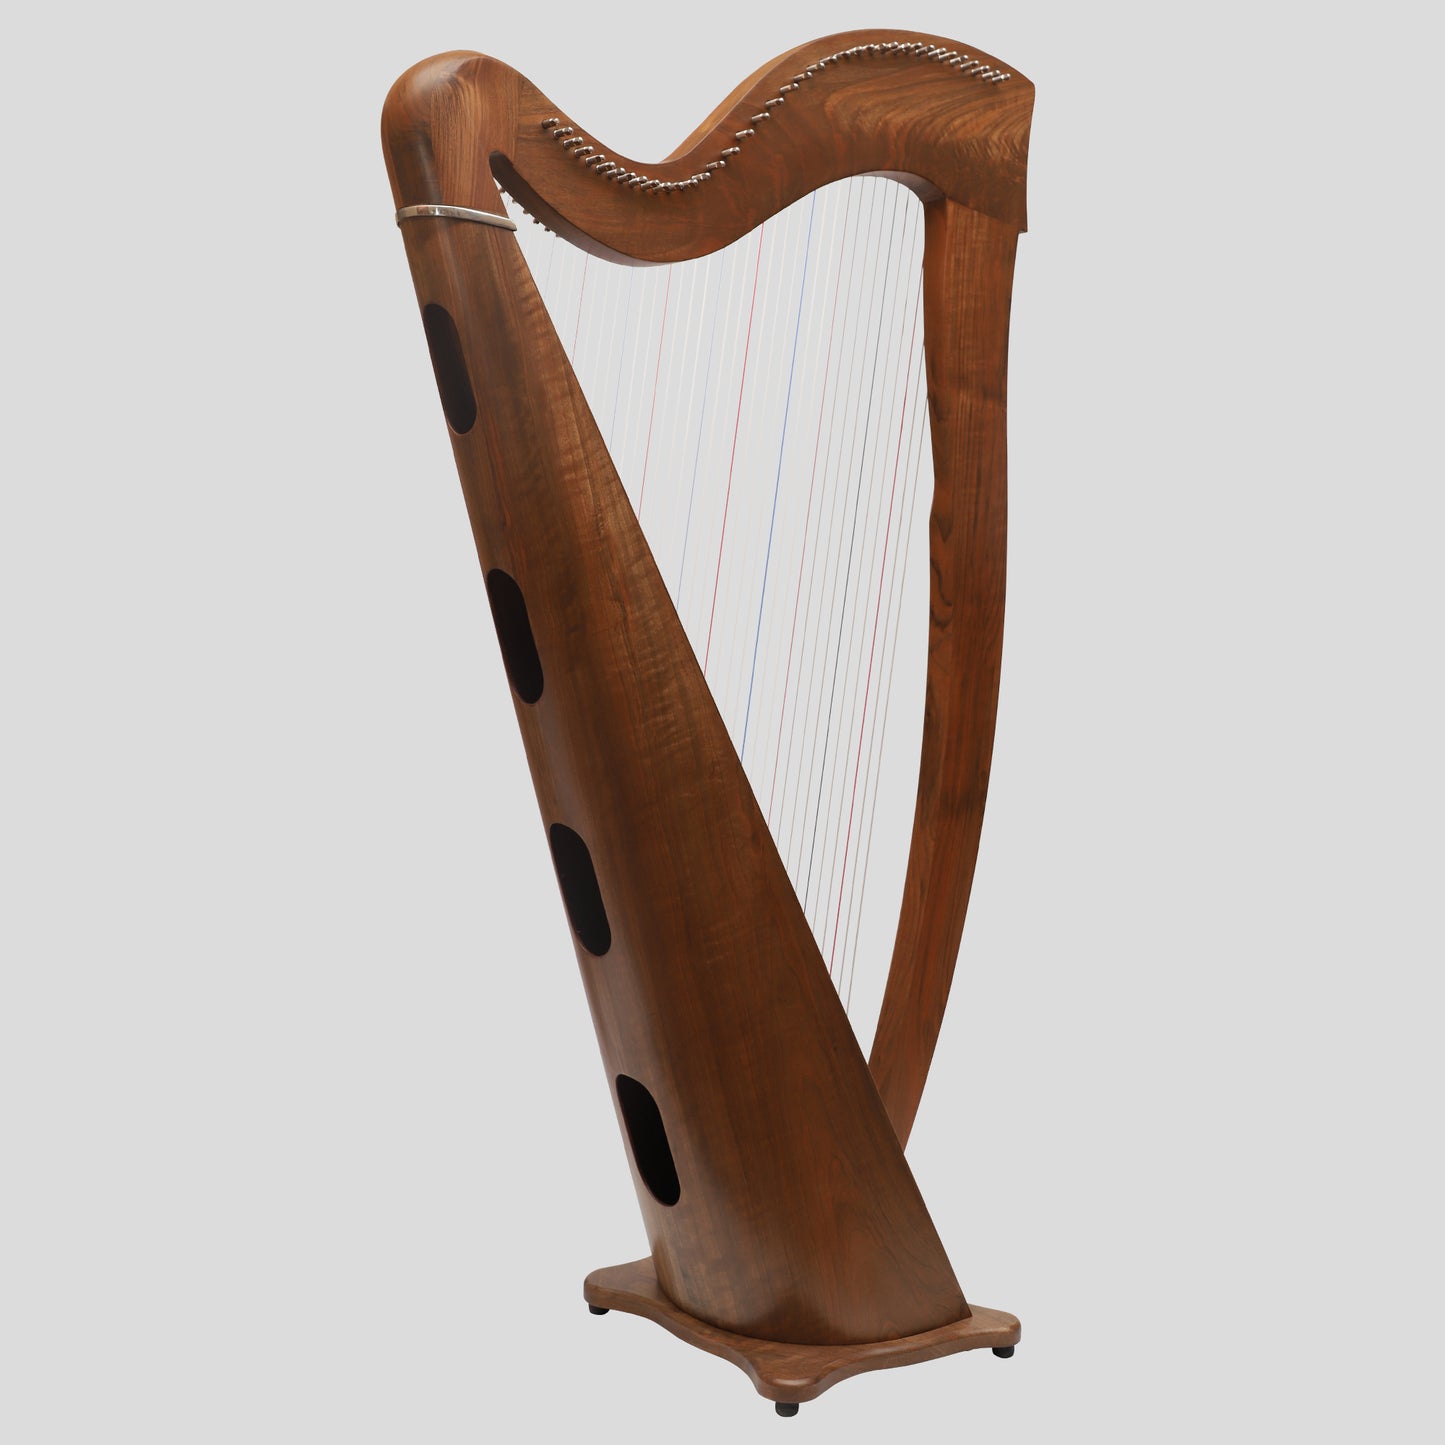 Mchugh Ayra Harp 38 Strings Walnut